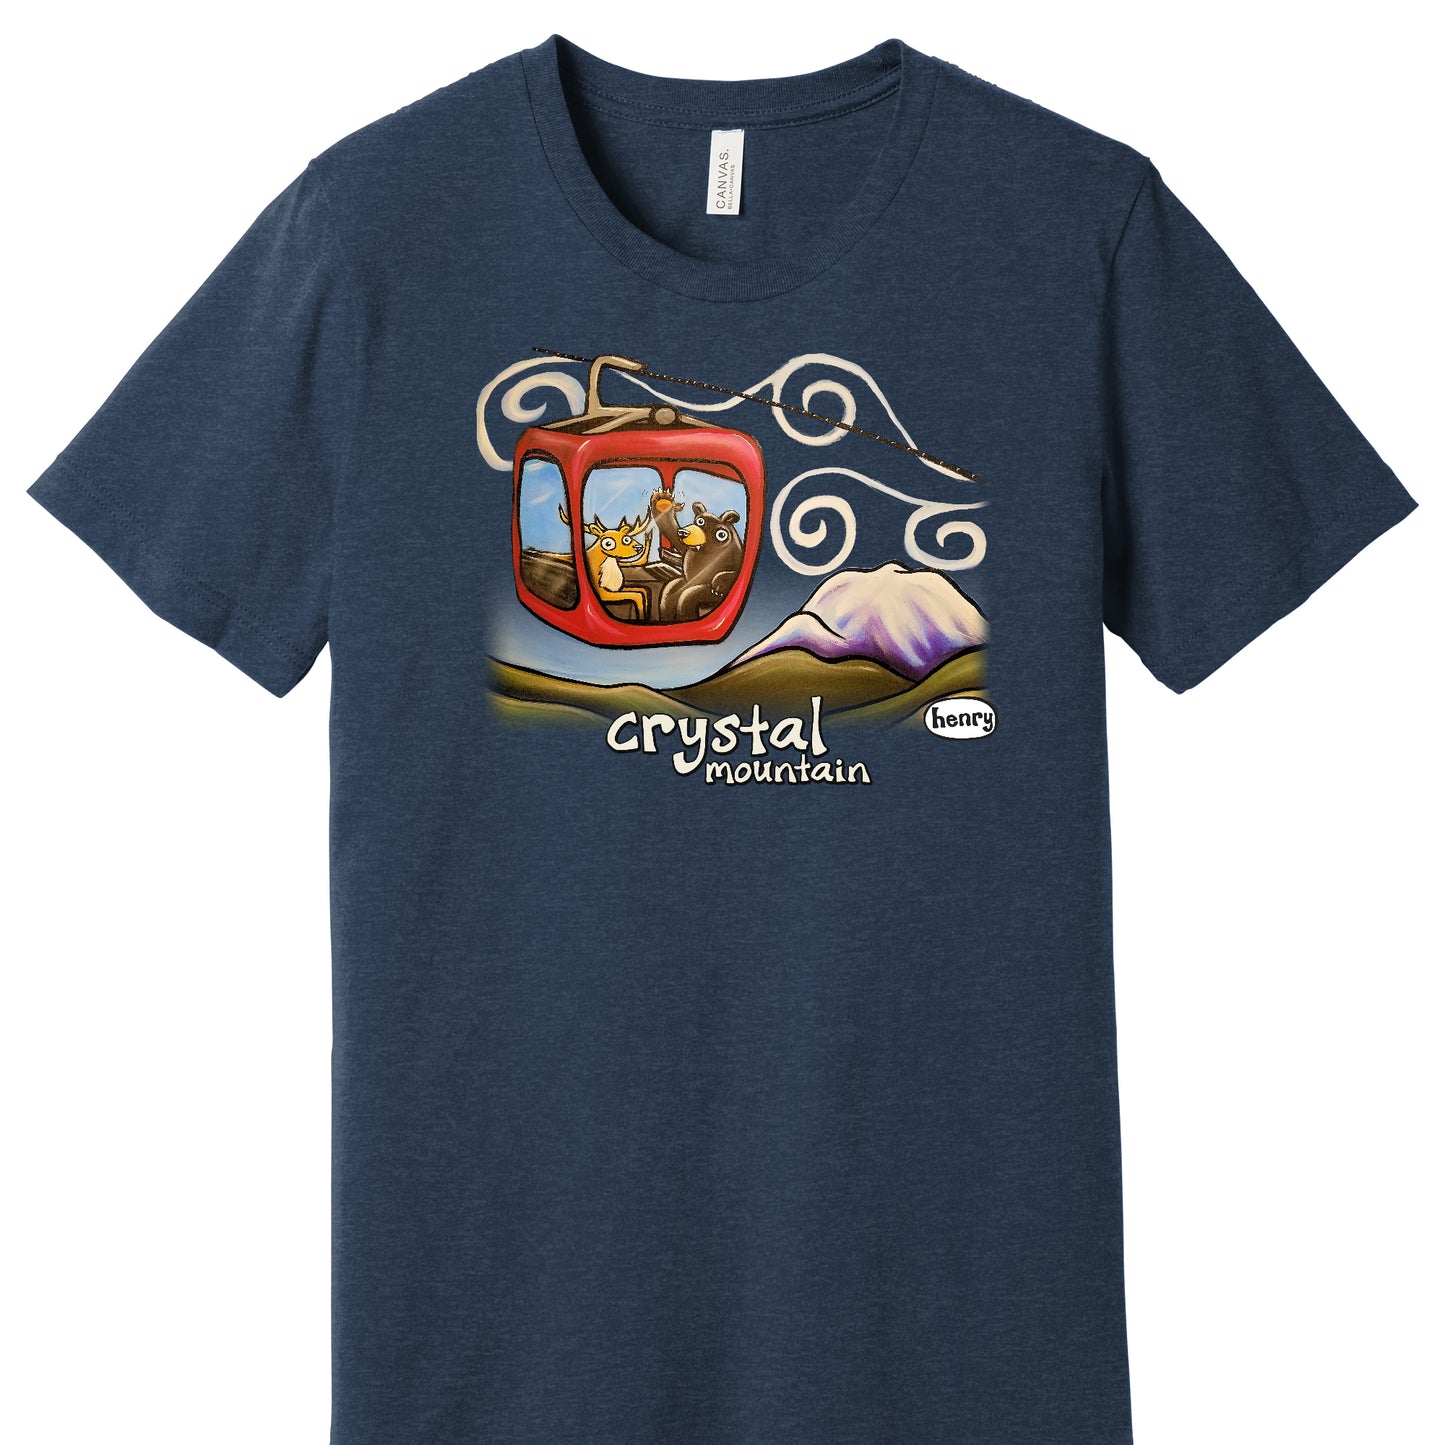 Gondola Fun at Crystal Mountain Unisex T-Shirt | Wearable Art by Seattle Mural Artist Ryan "Henry" Ward